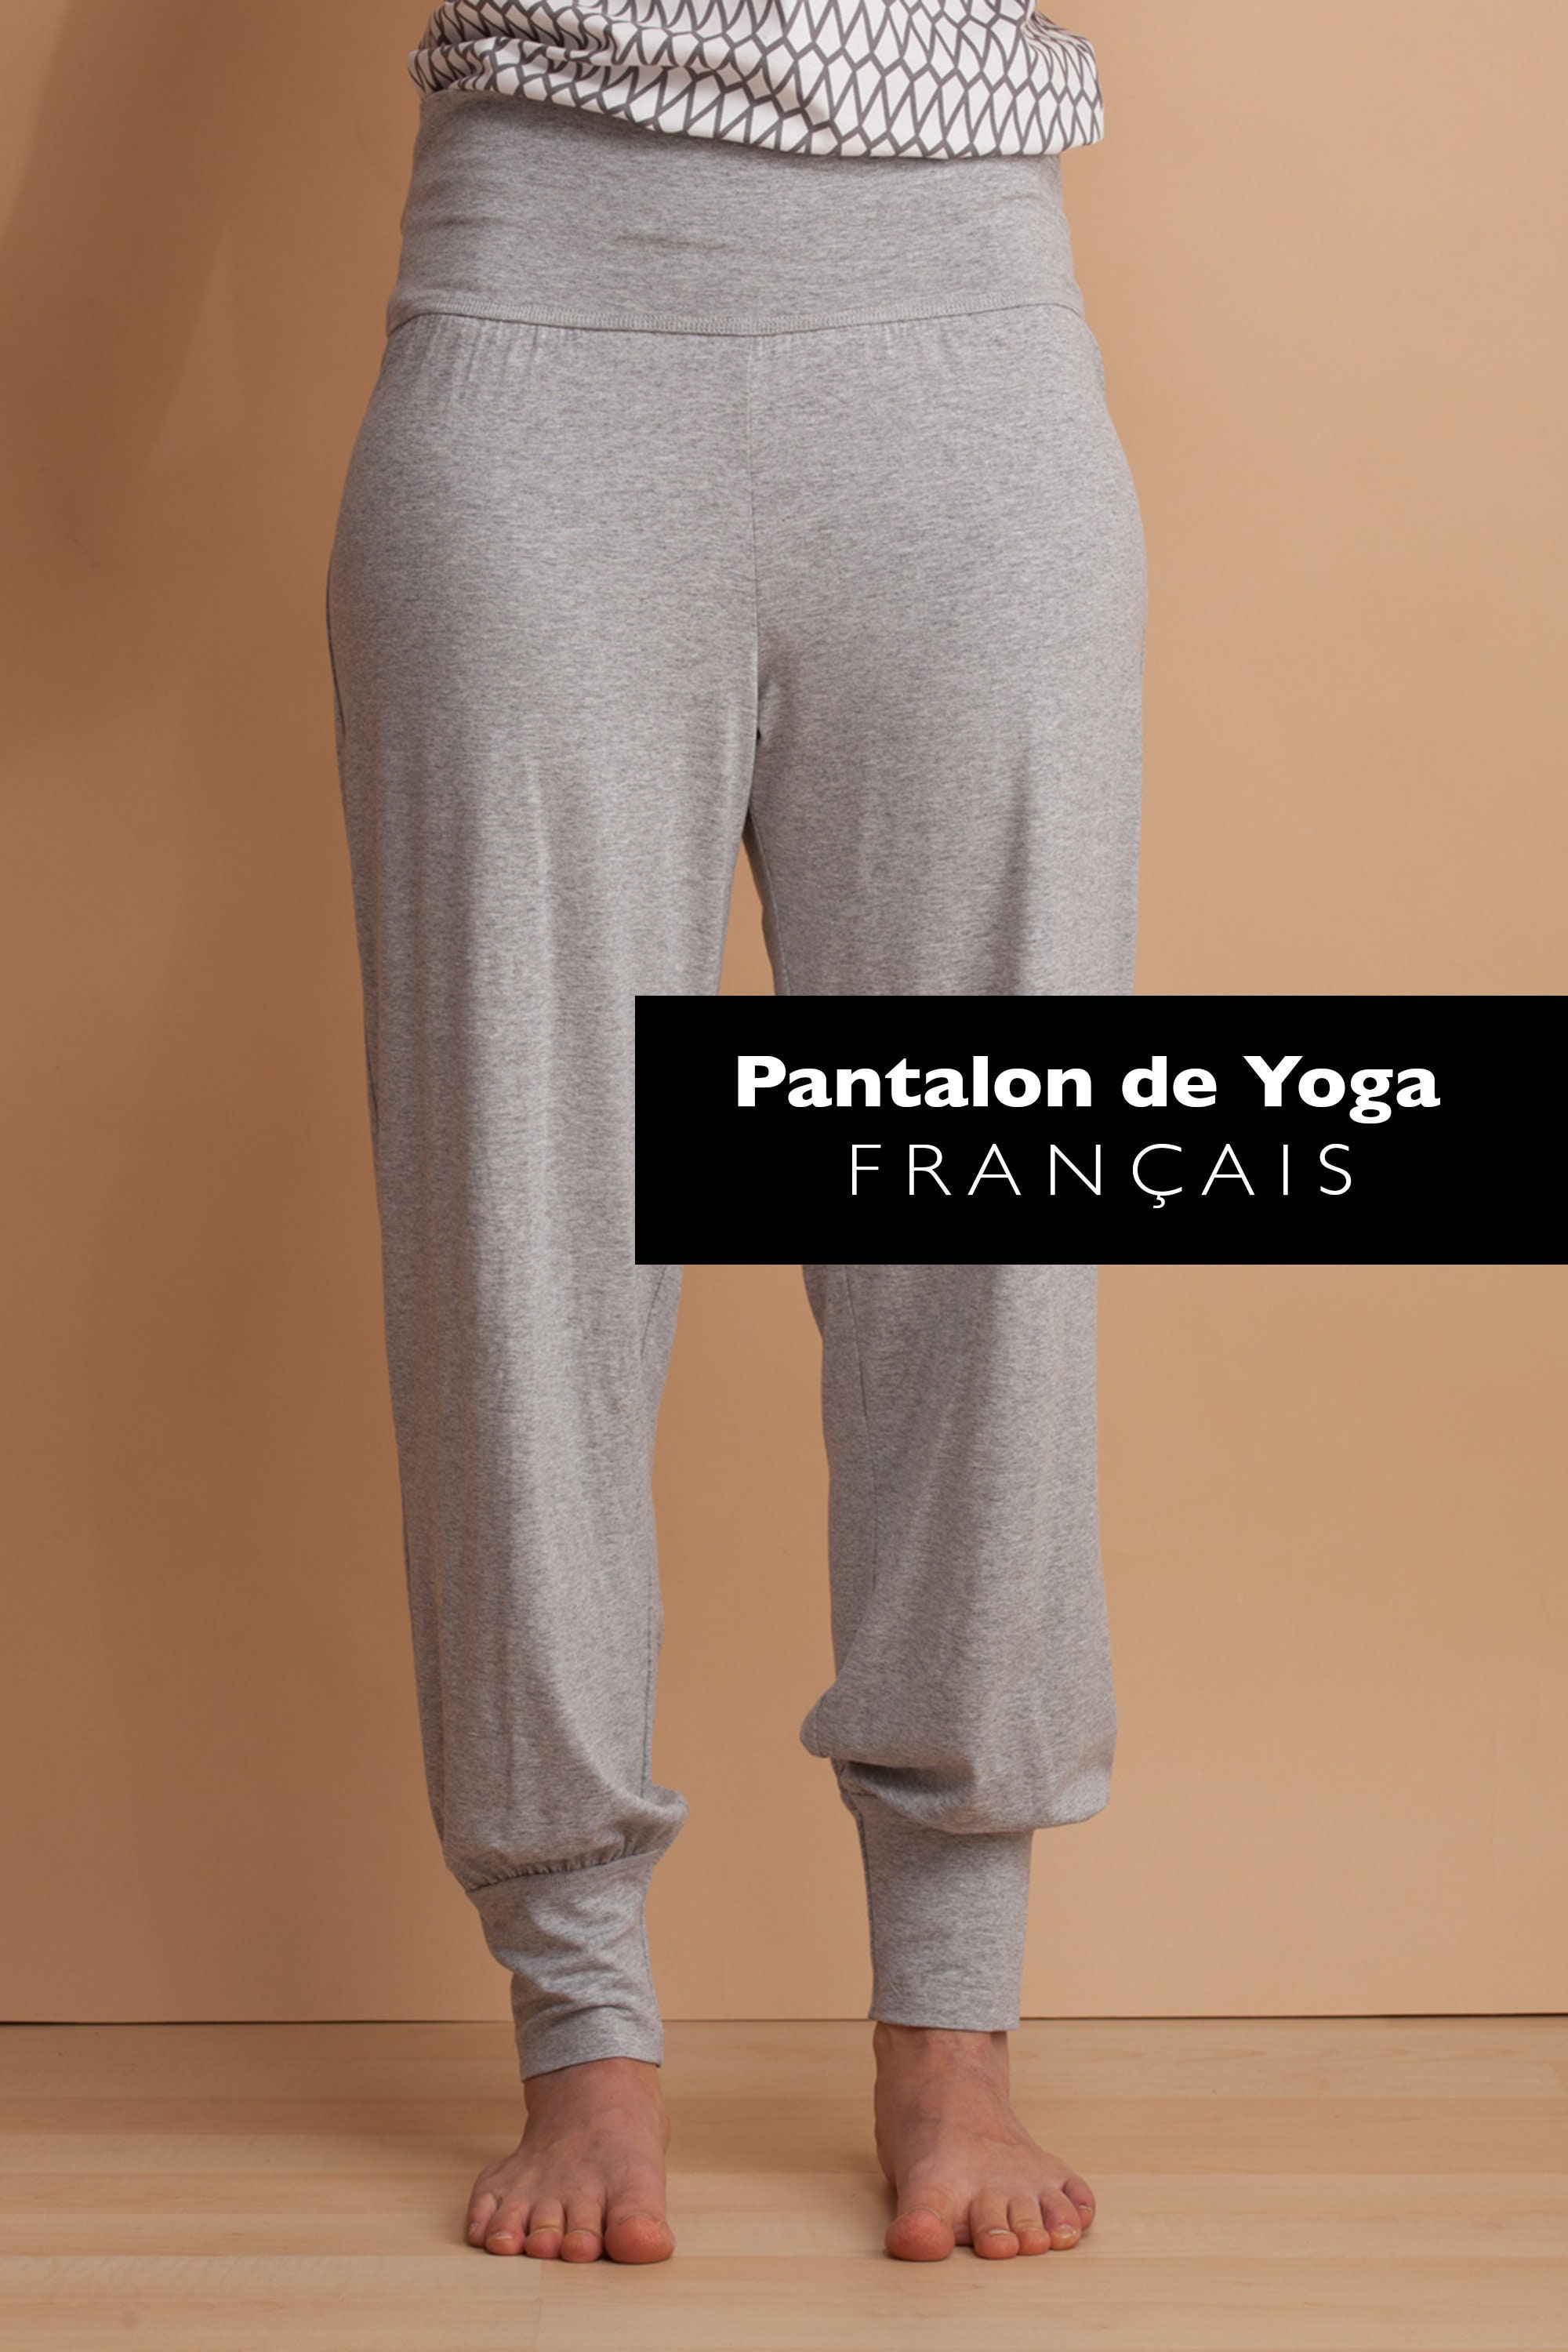 E-patron FRANÇAIS : Pantalon De Yoga Tailles Européennes 34-52 6-24 USA  8-26 UK 